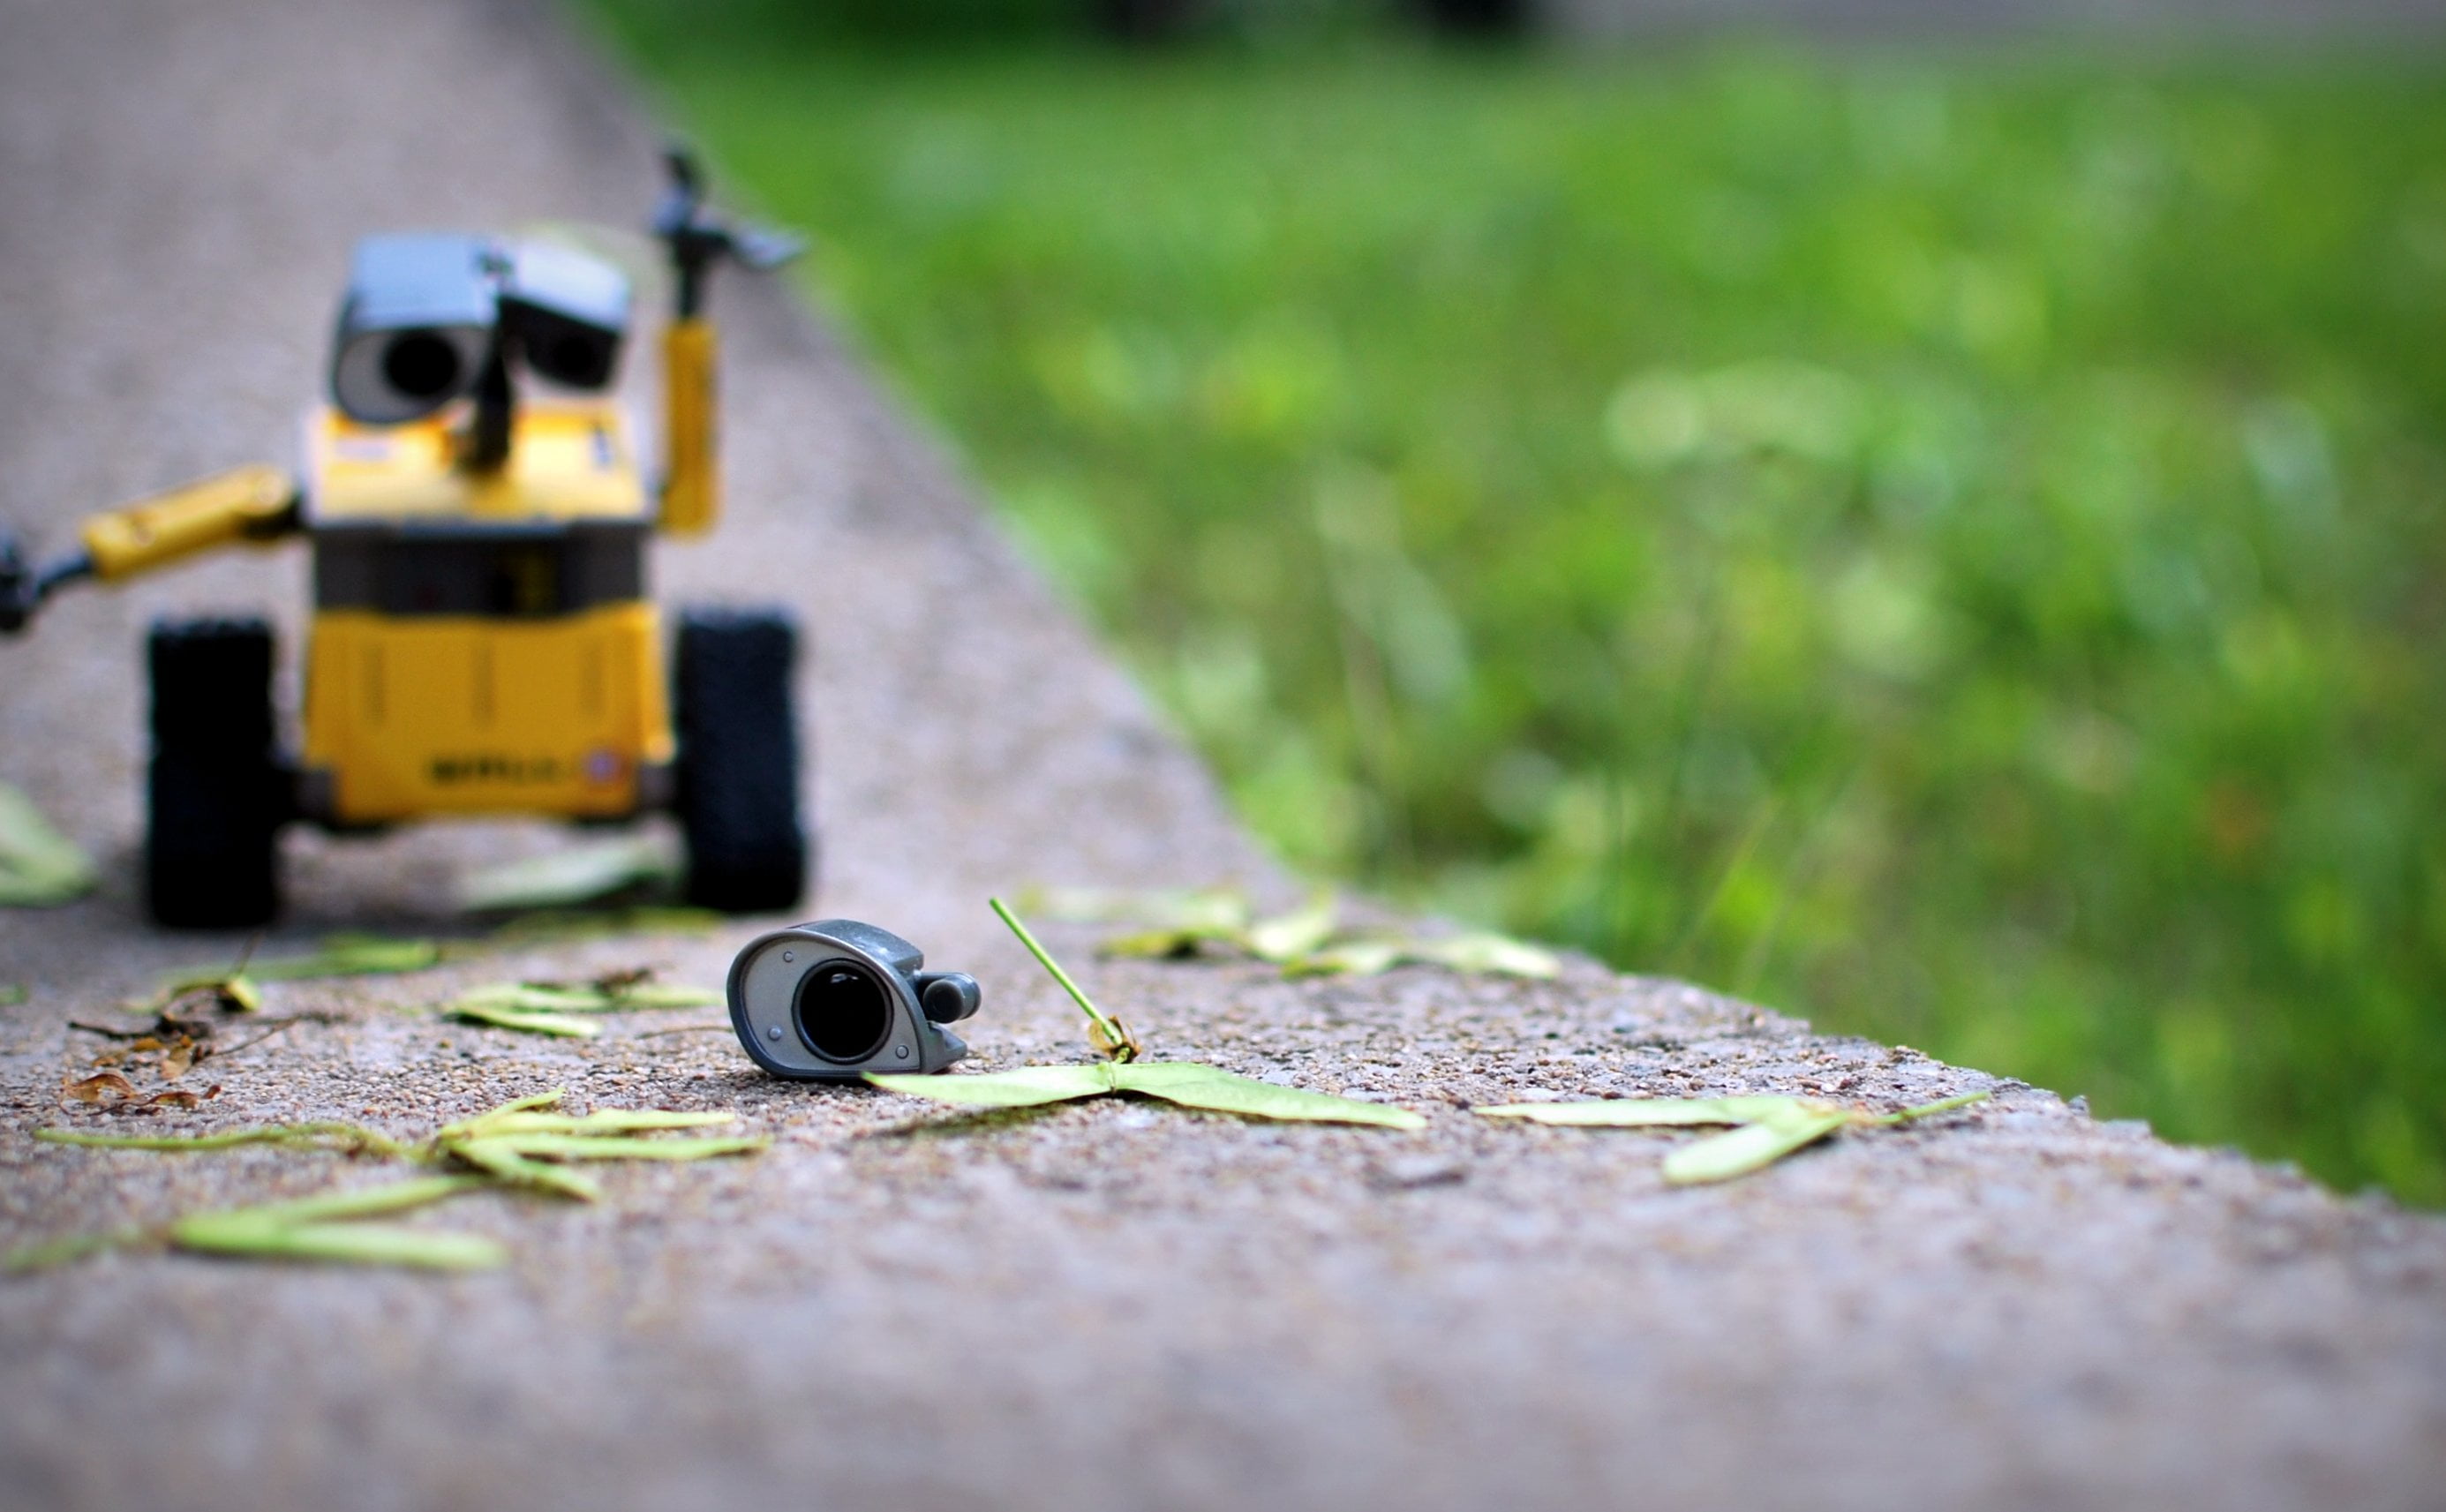 Wall-E plastic toy miniature photography